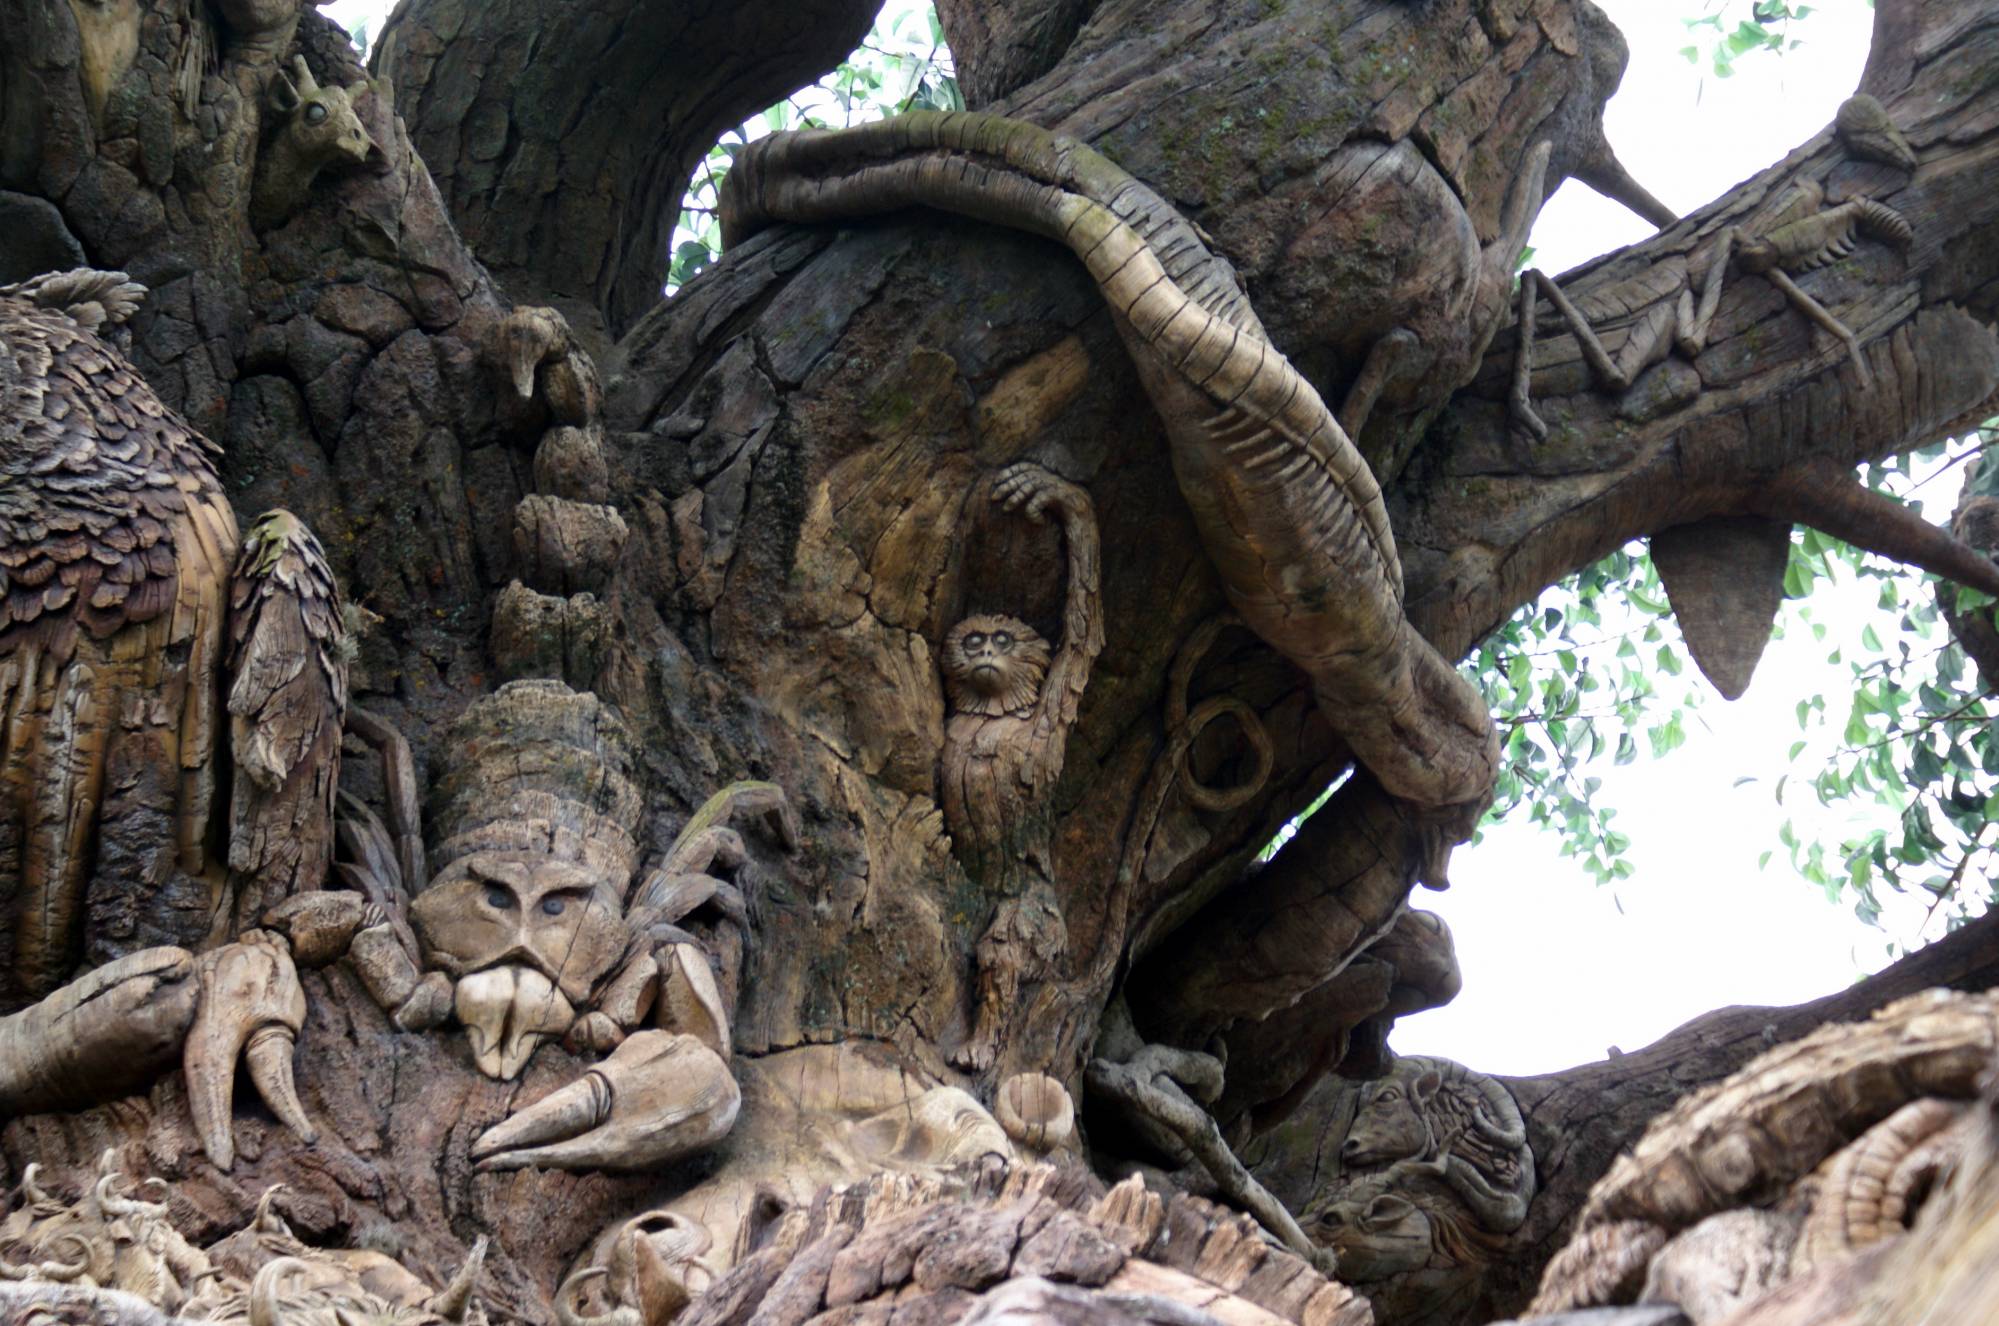 Tree of Life Monkey and Scorpion